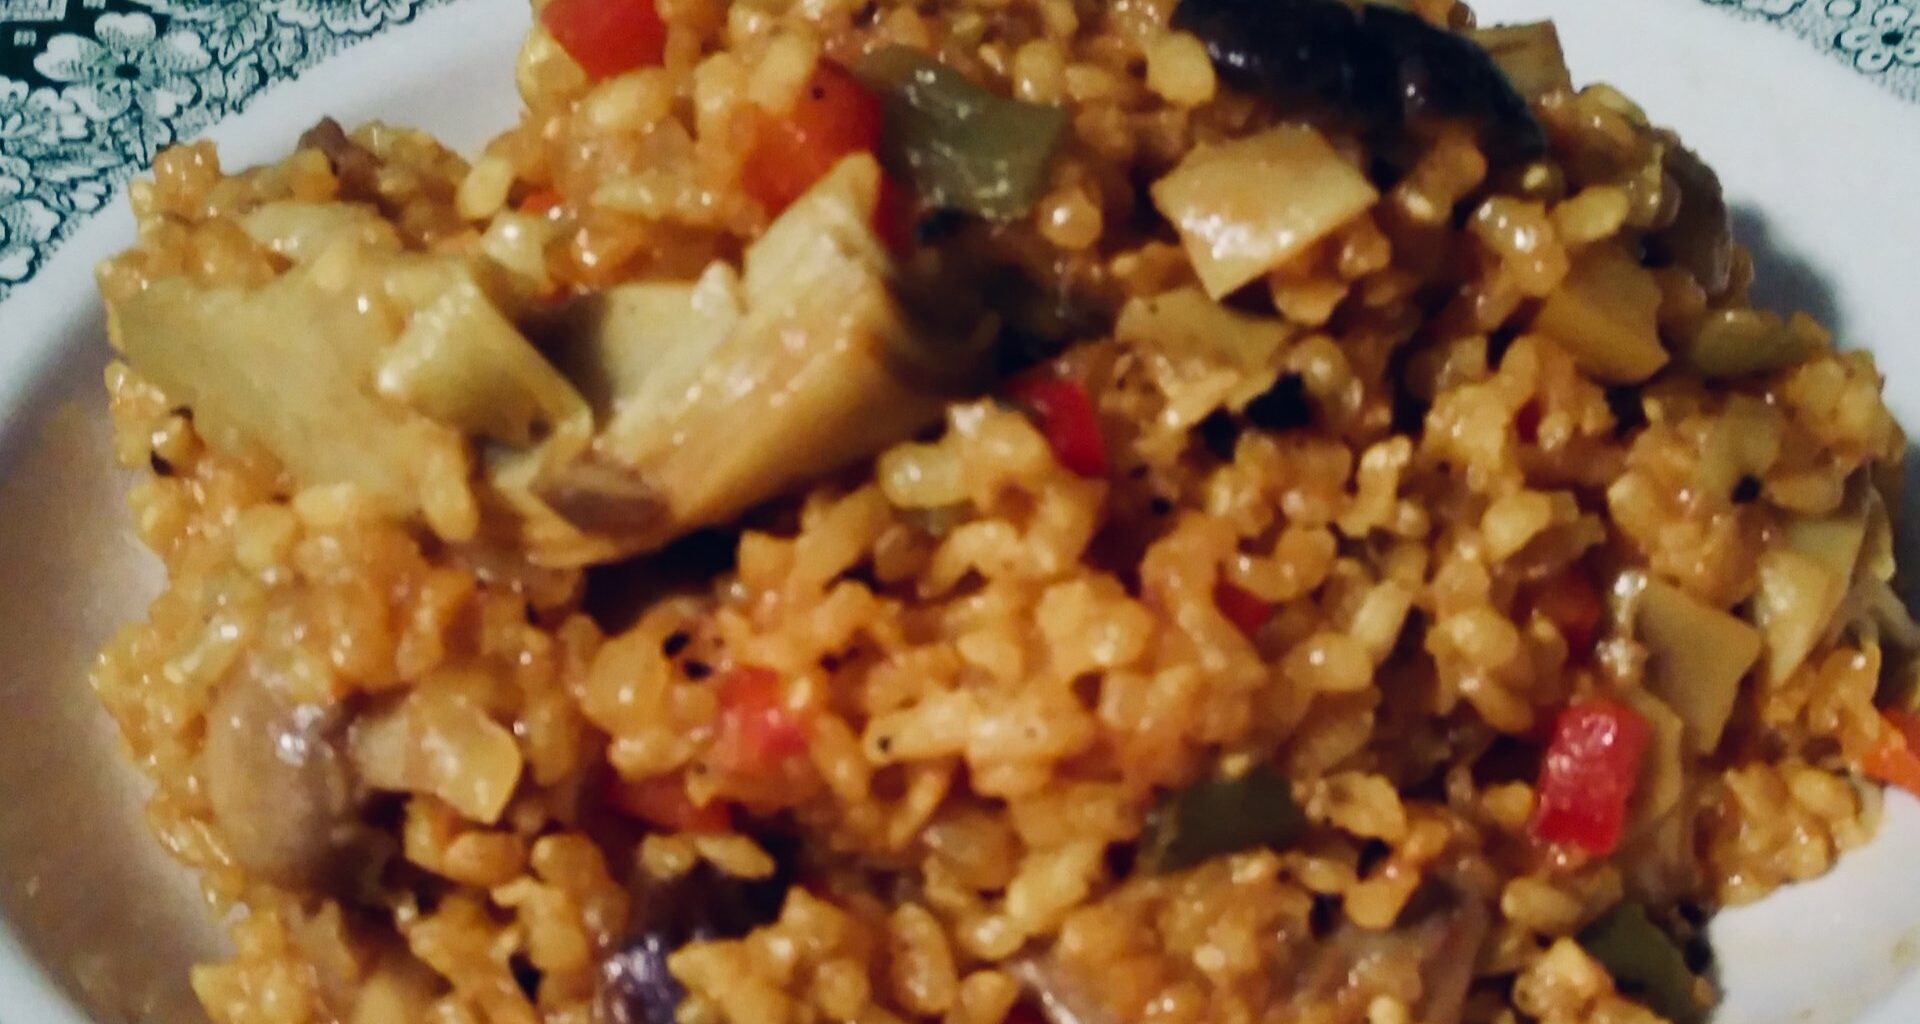 Foto receta arroz integral con verduras